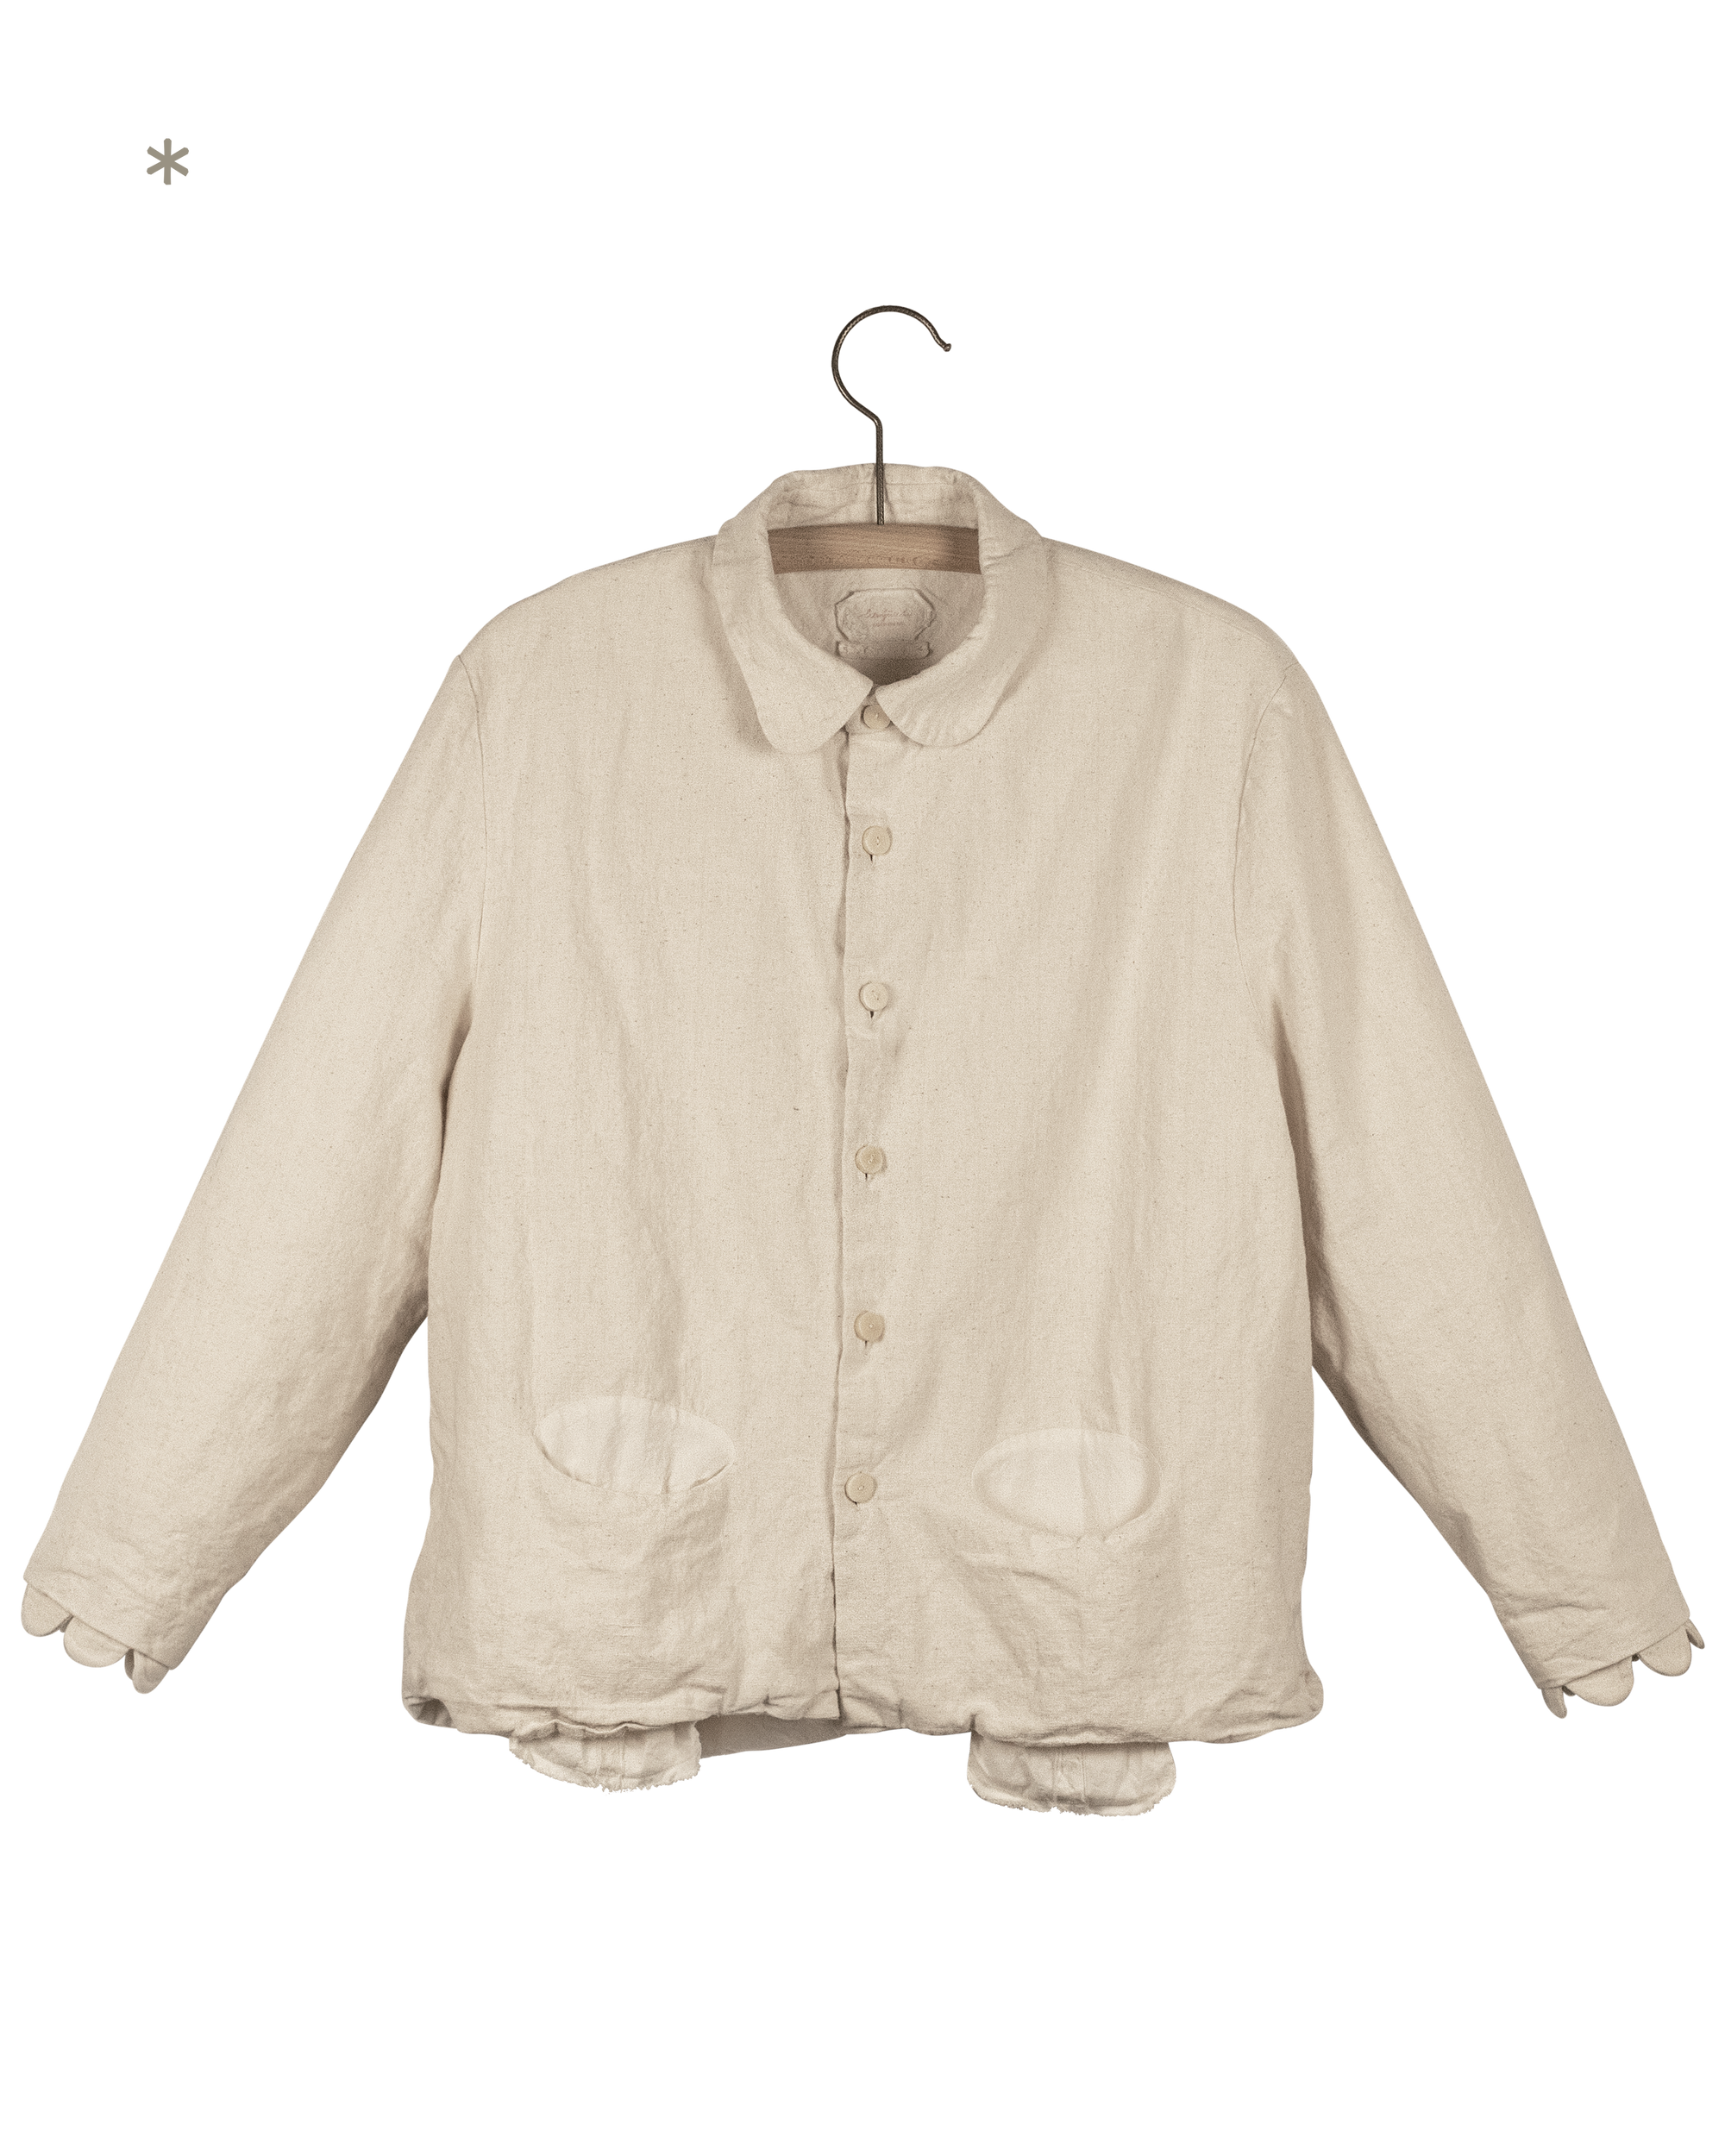 Pond Pockets and Petaled Cuffs Jacket Shirt